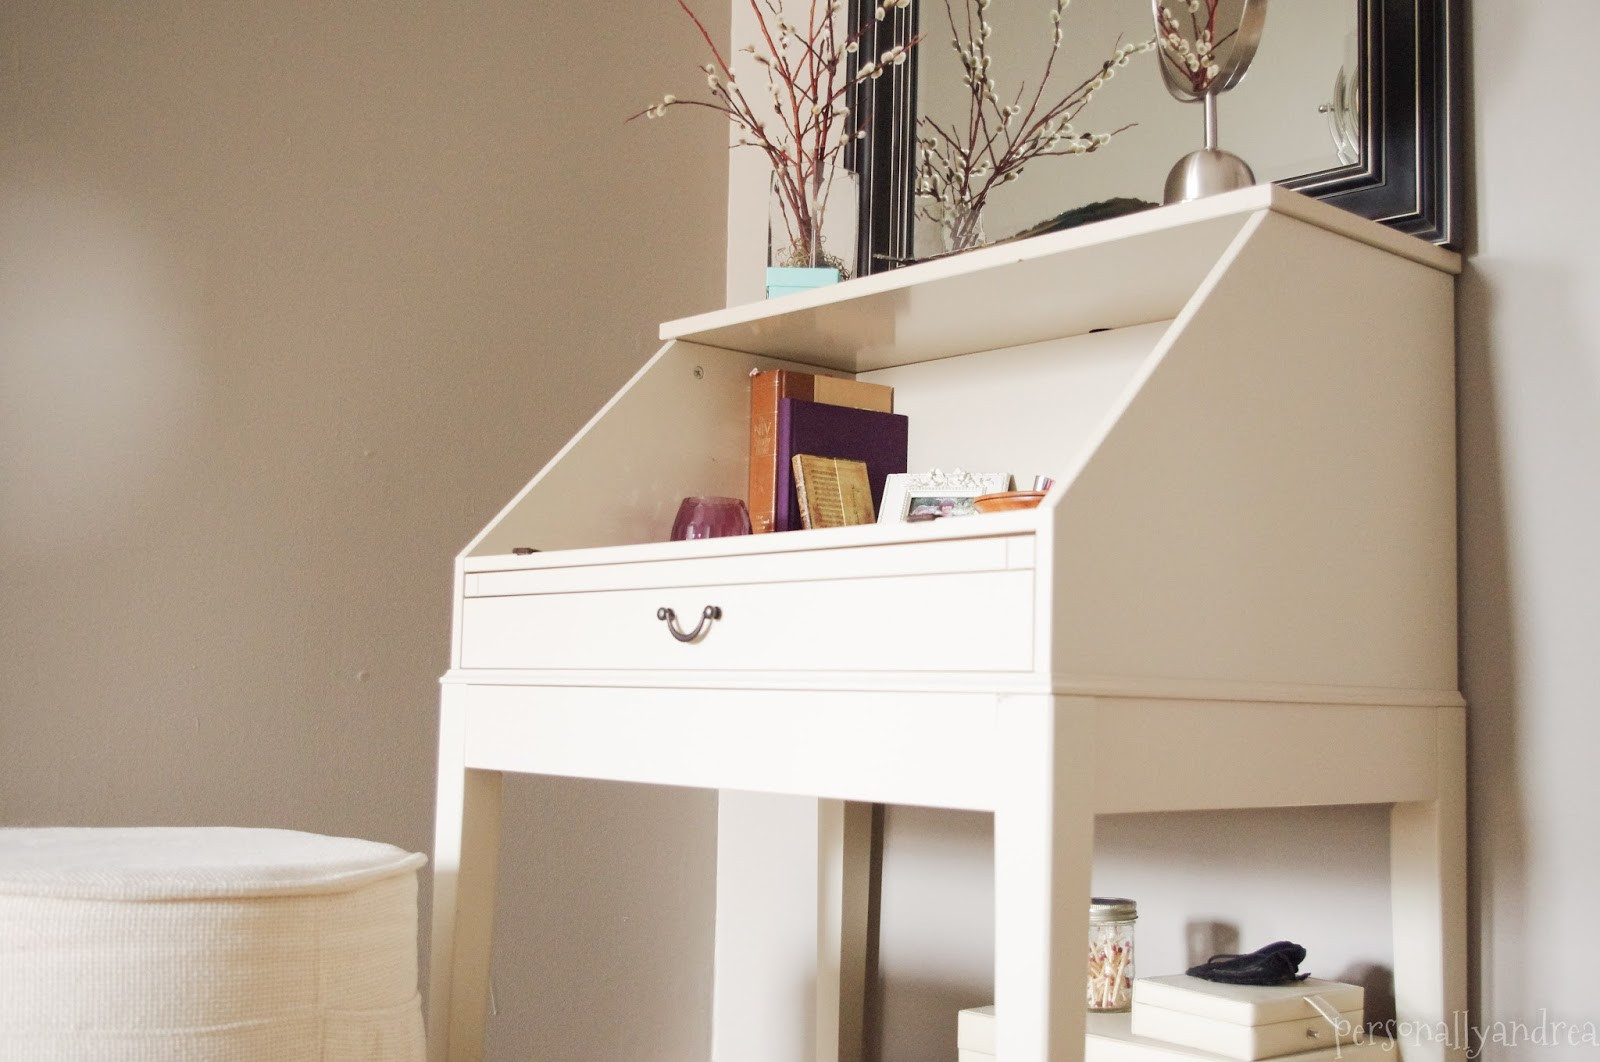 Best ideas about Ikea Desk DIY
. Save or Pin DIY Repurposed IKEA Desk Now.